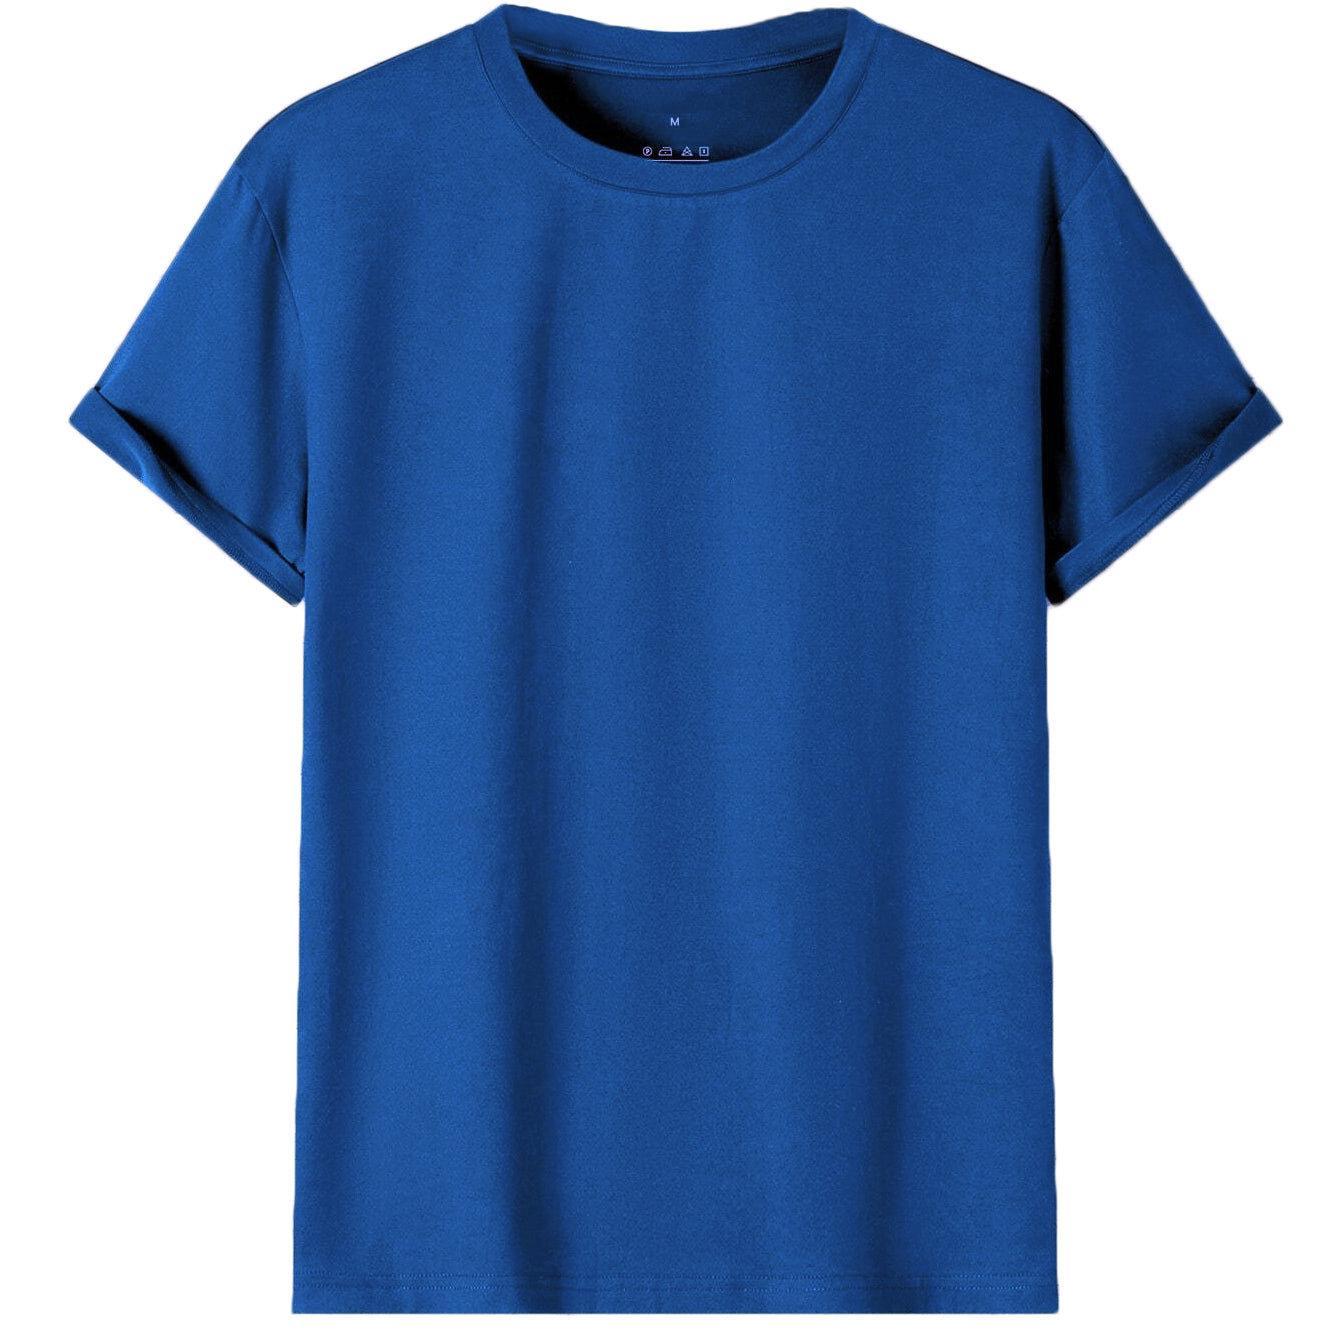 Adult 100% Cotton T-Shirt Unisex Men's Basic Plain Blank Crew Tee Tops Shirts, Royal Blue, 2XL